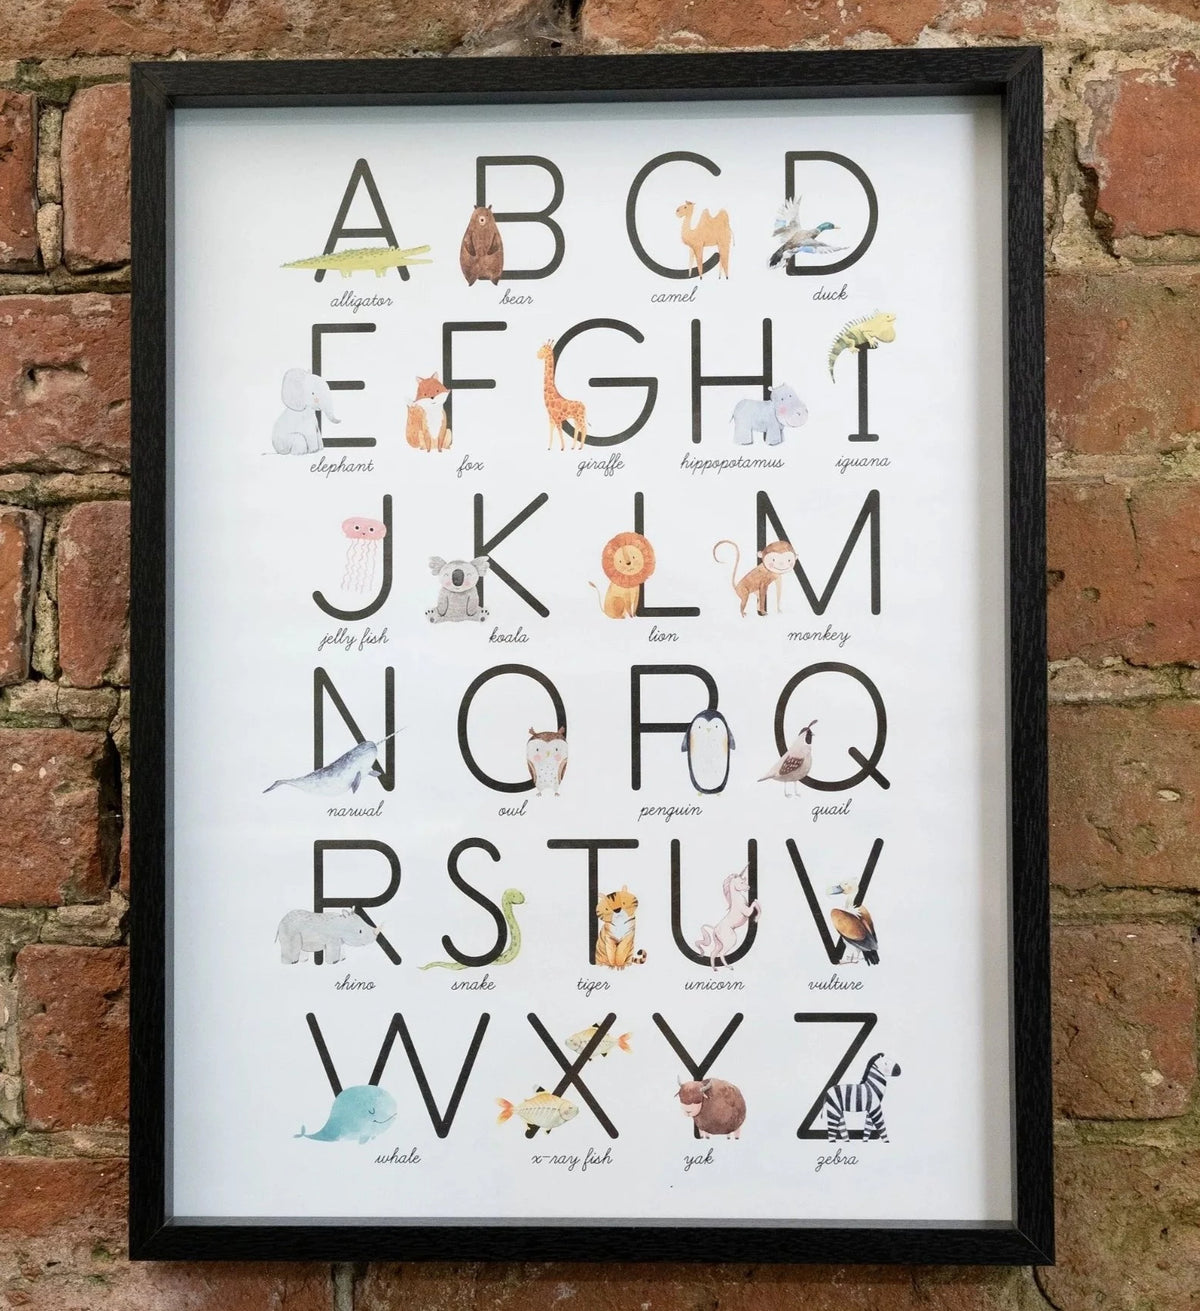 Animal Alphabet Print "A-Z" - Learning Tool for Children